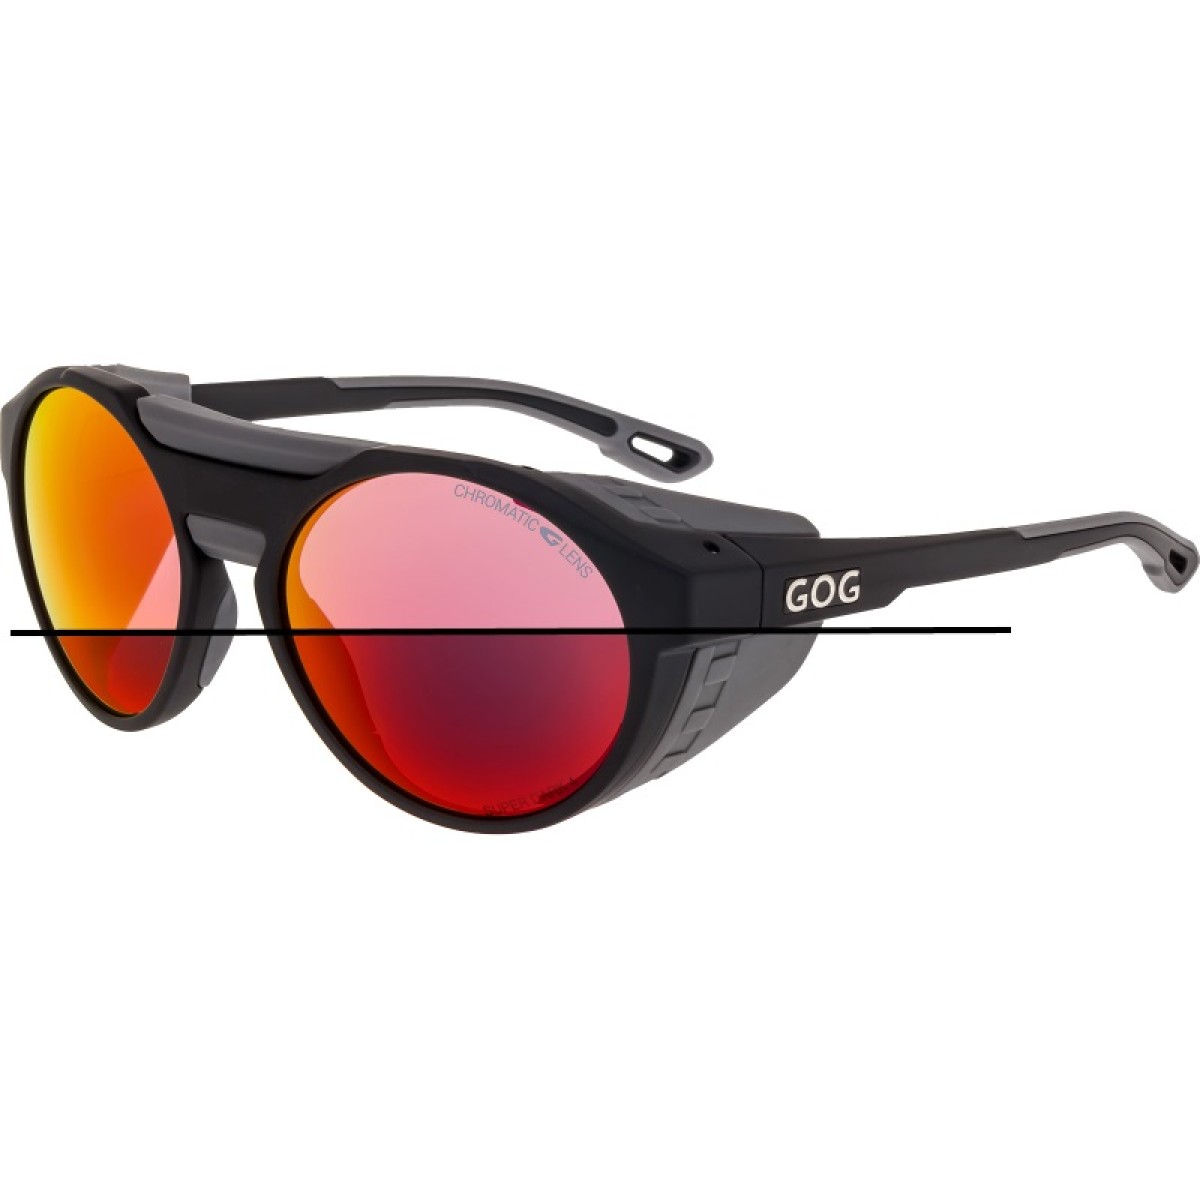 Photochromatic Sunglasses Manaslu E495-2 Black GOG - view 5